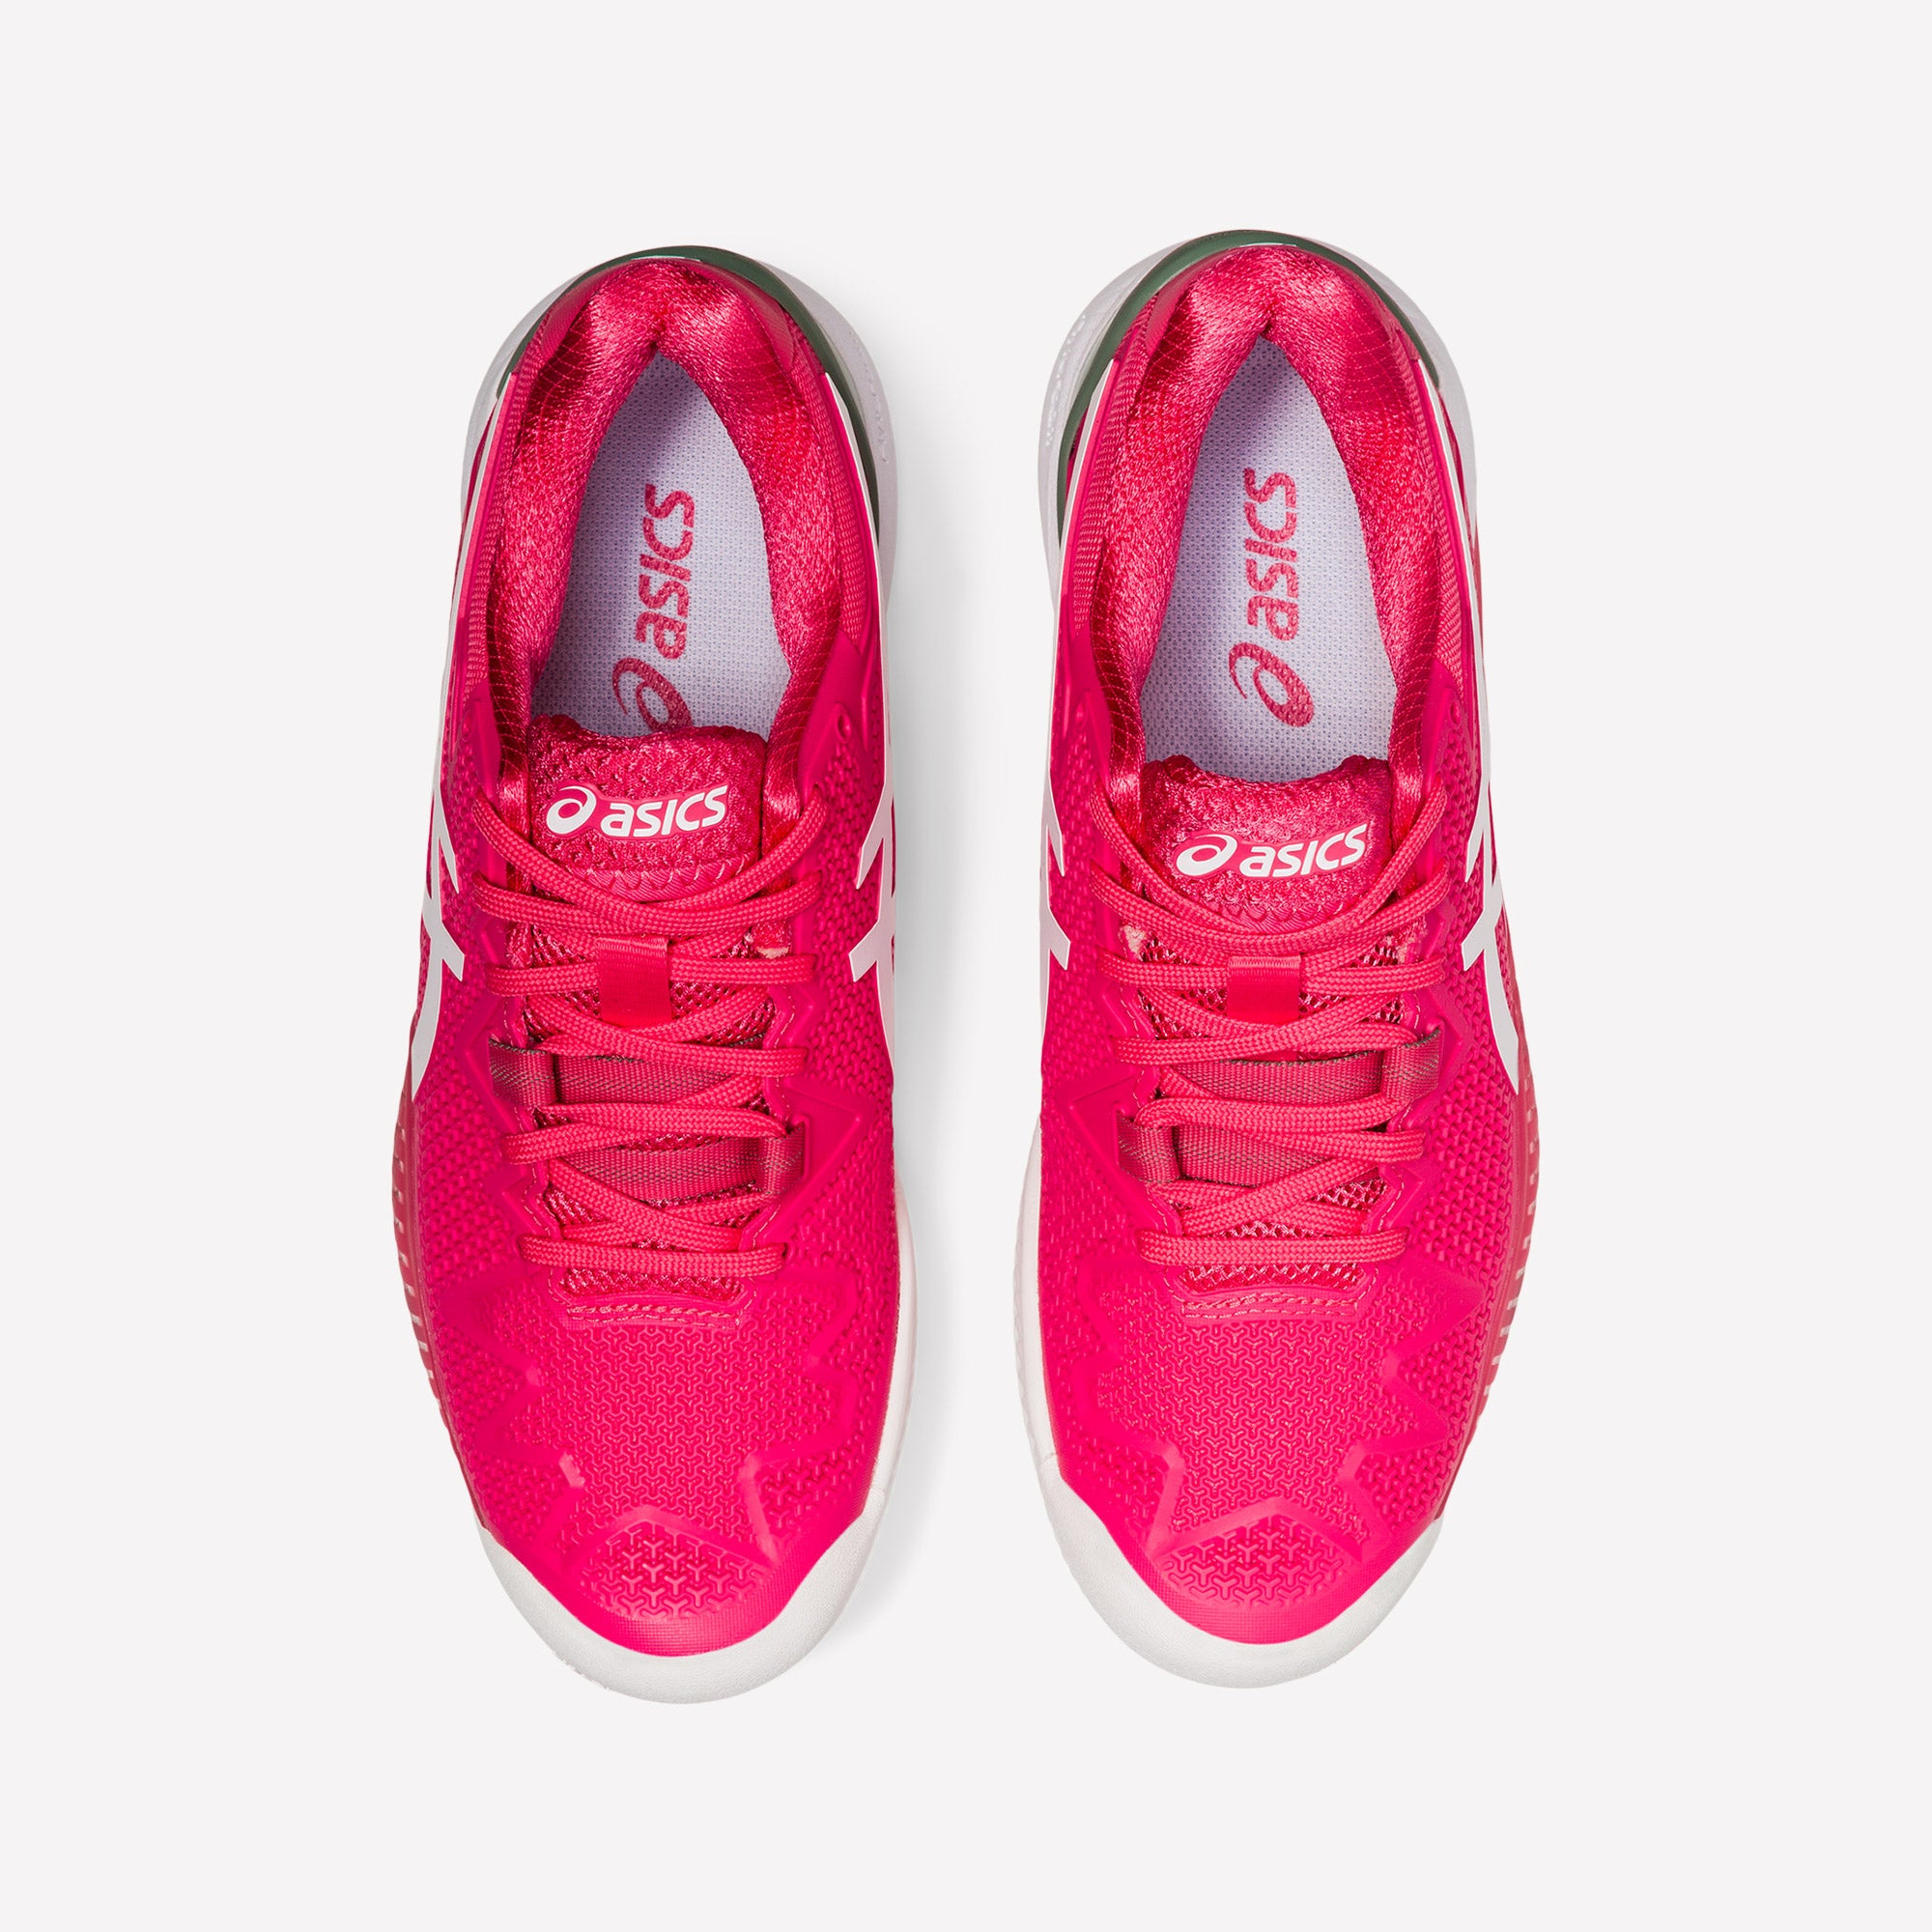 ASICS Gel-Resolution 8 Women's Clay Court Tennis Shoes Pink (6)